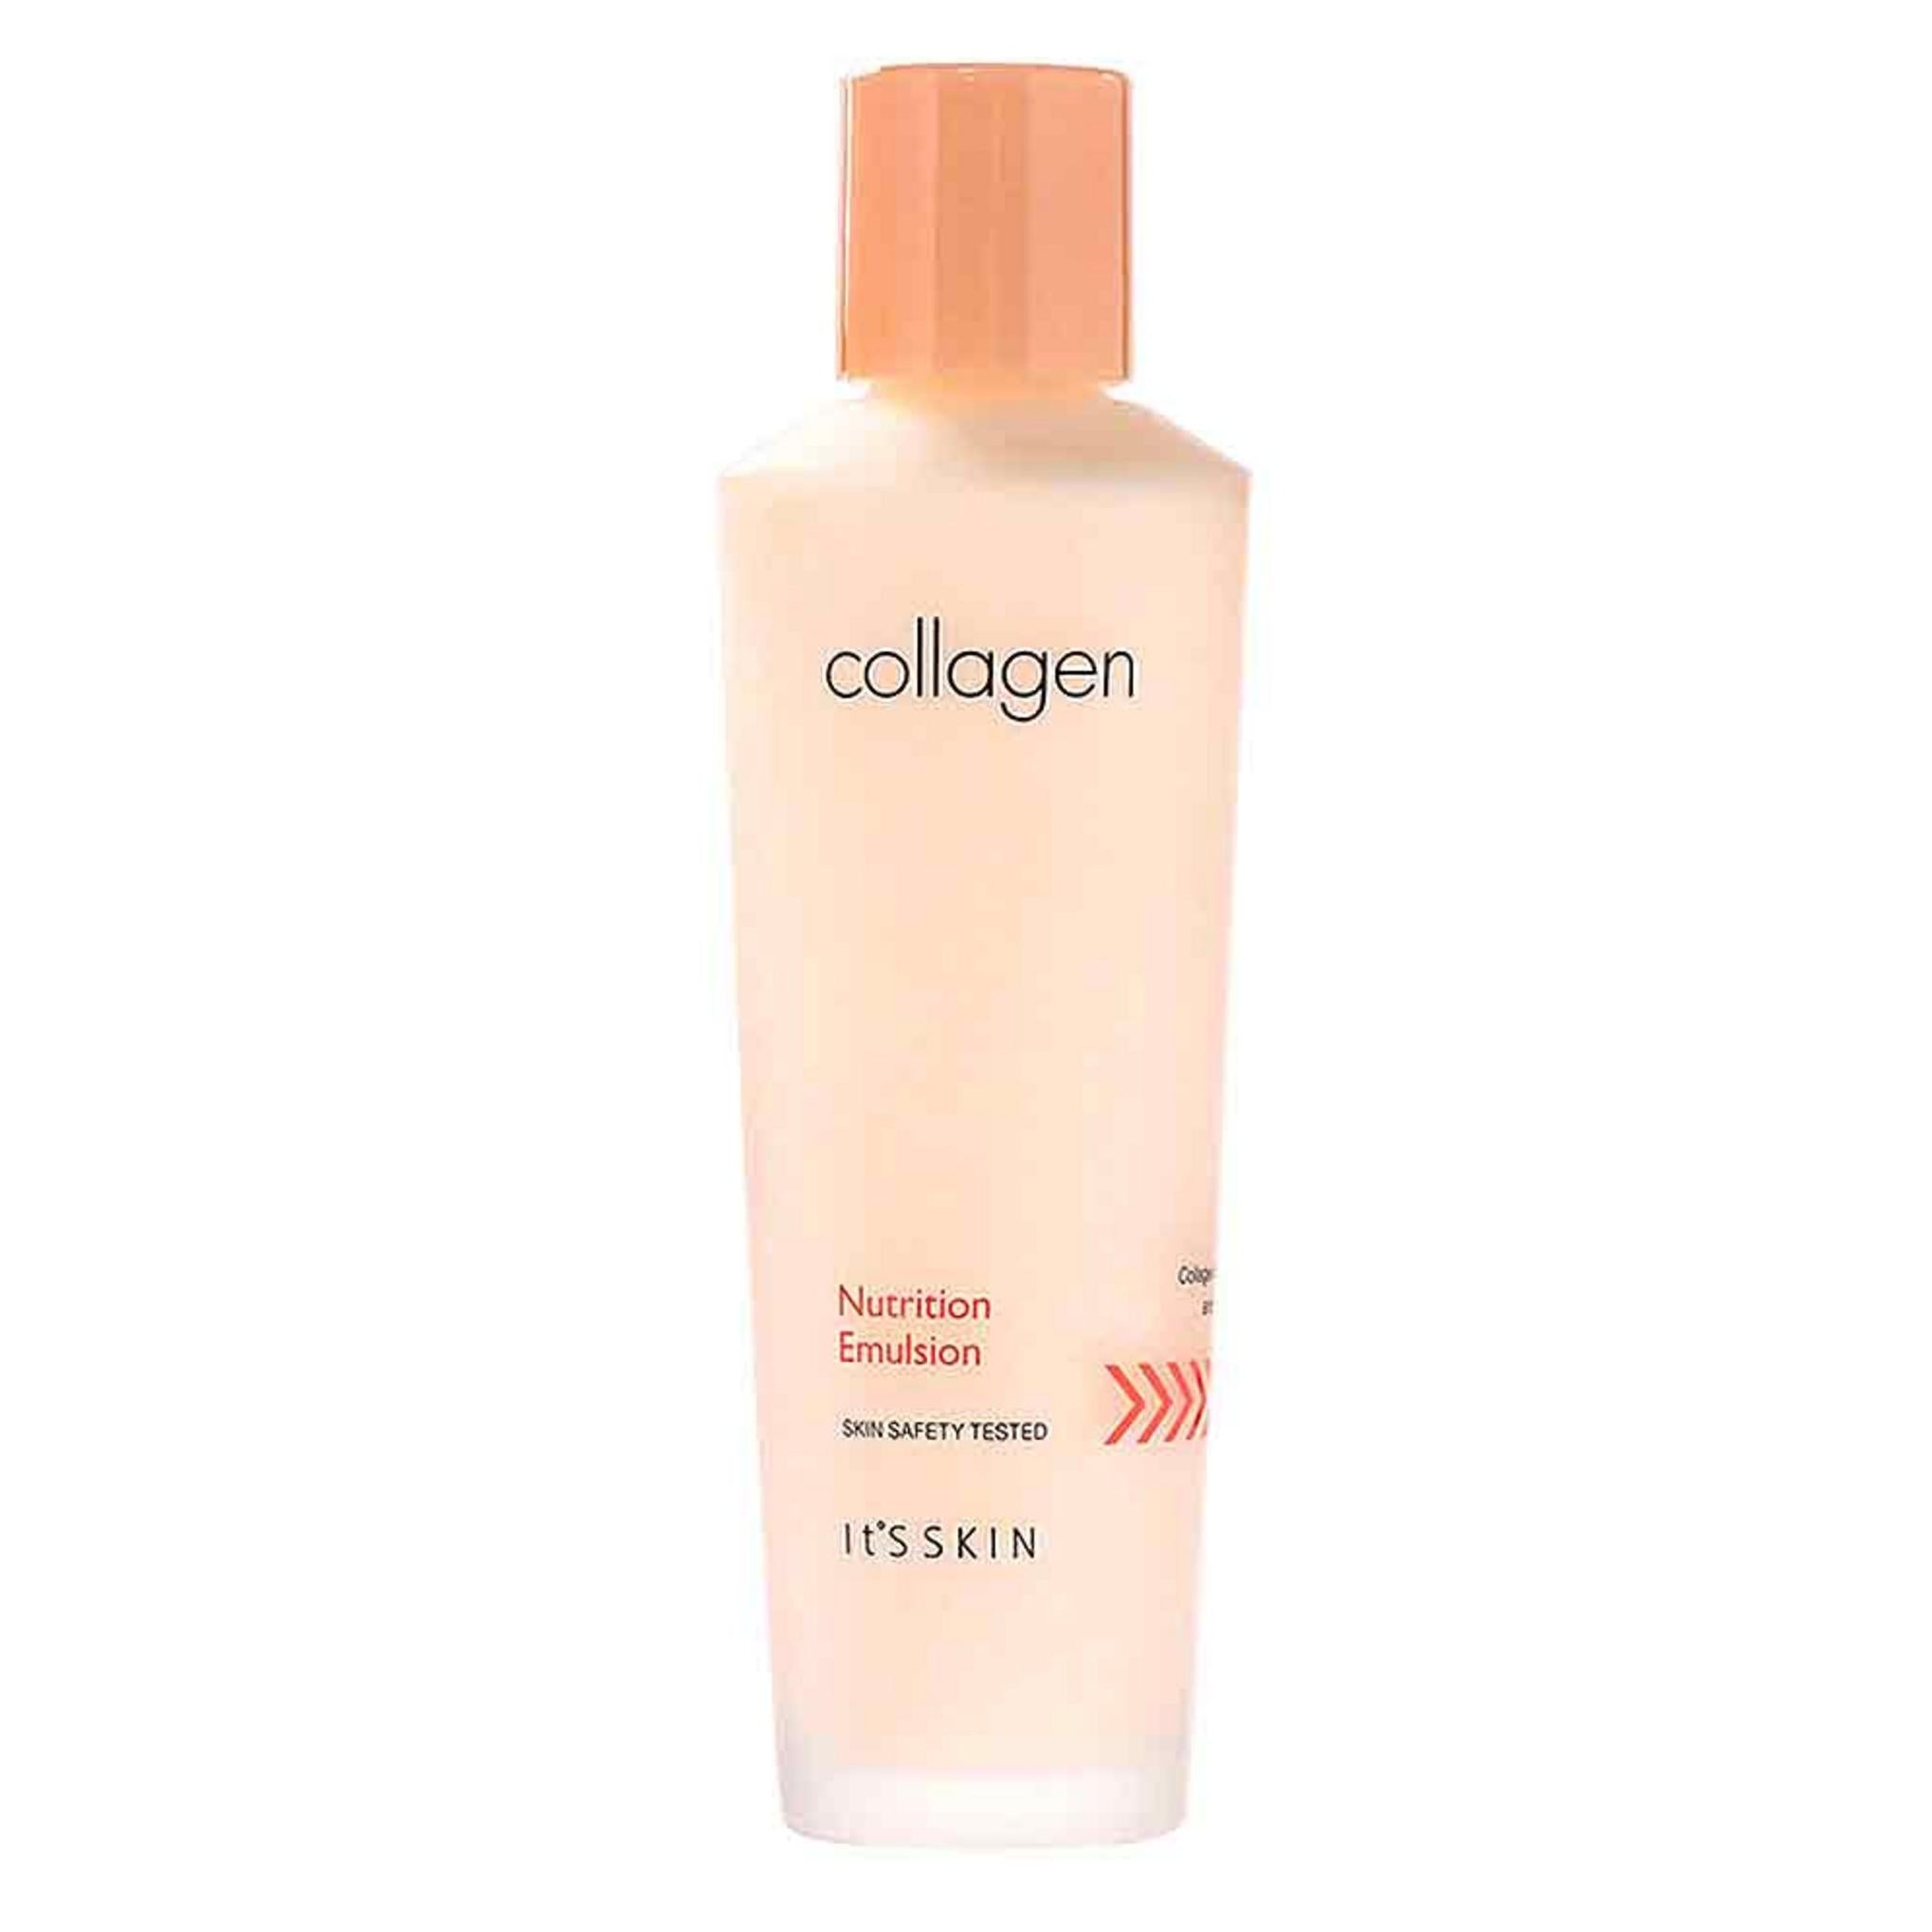 It's skin Collagen Firming Emulsion Lotion/Emulsion